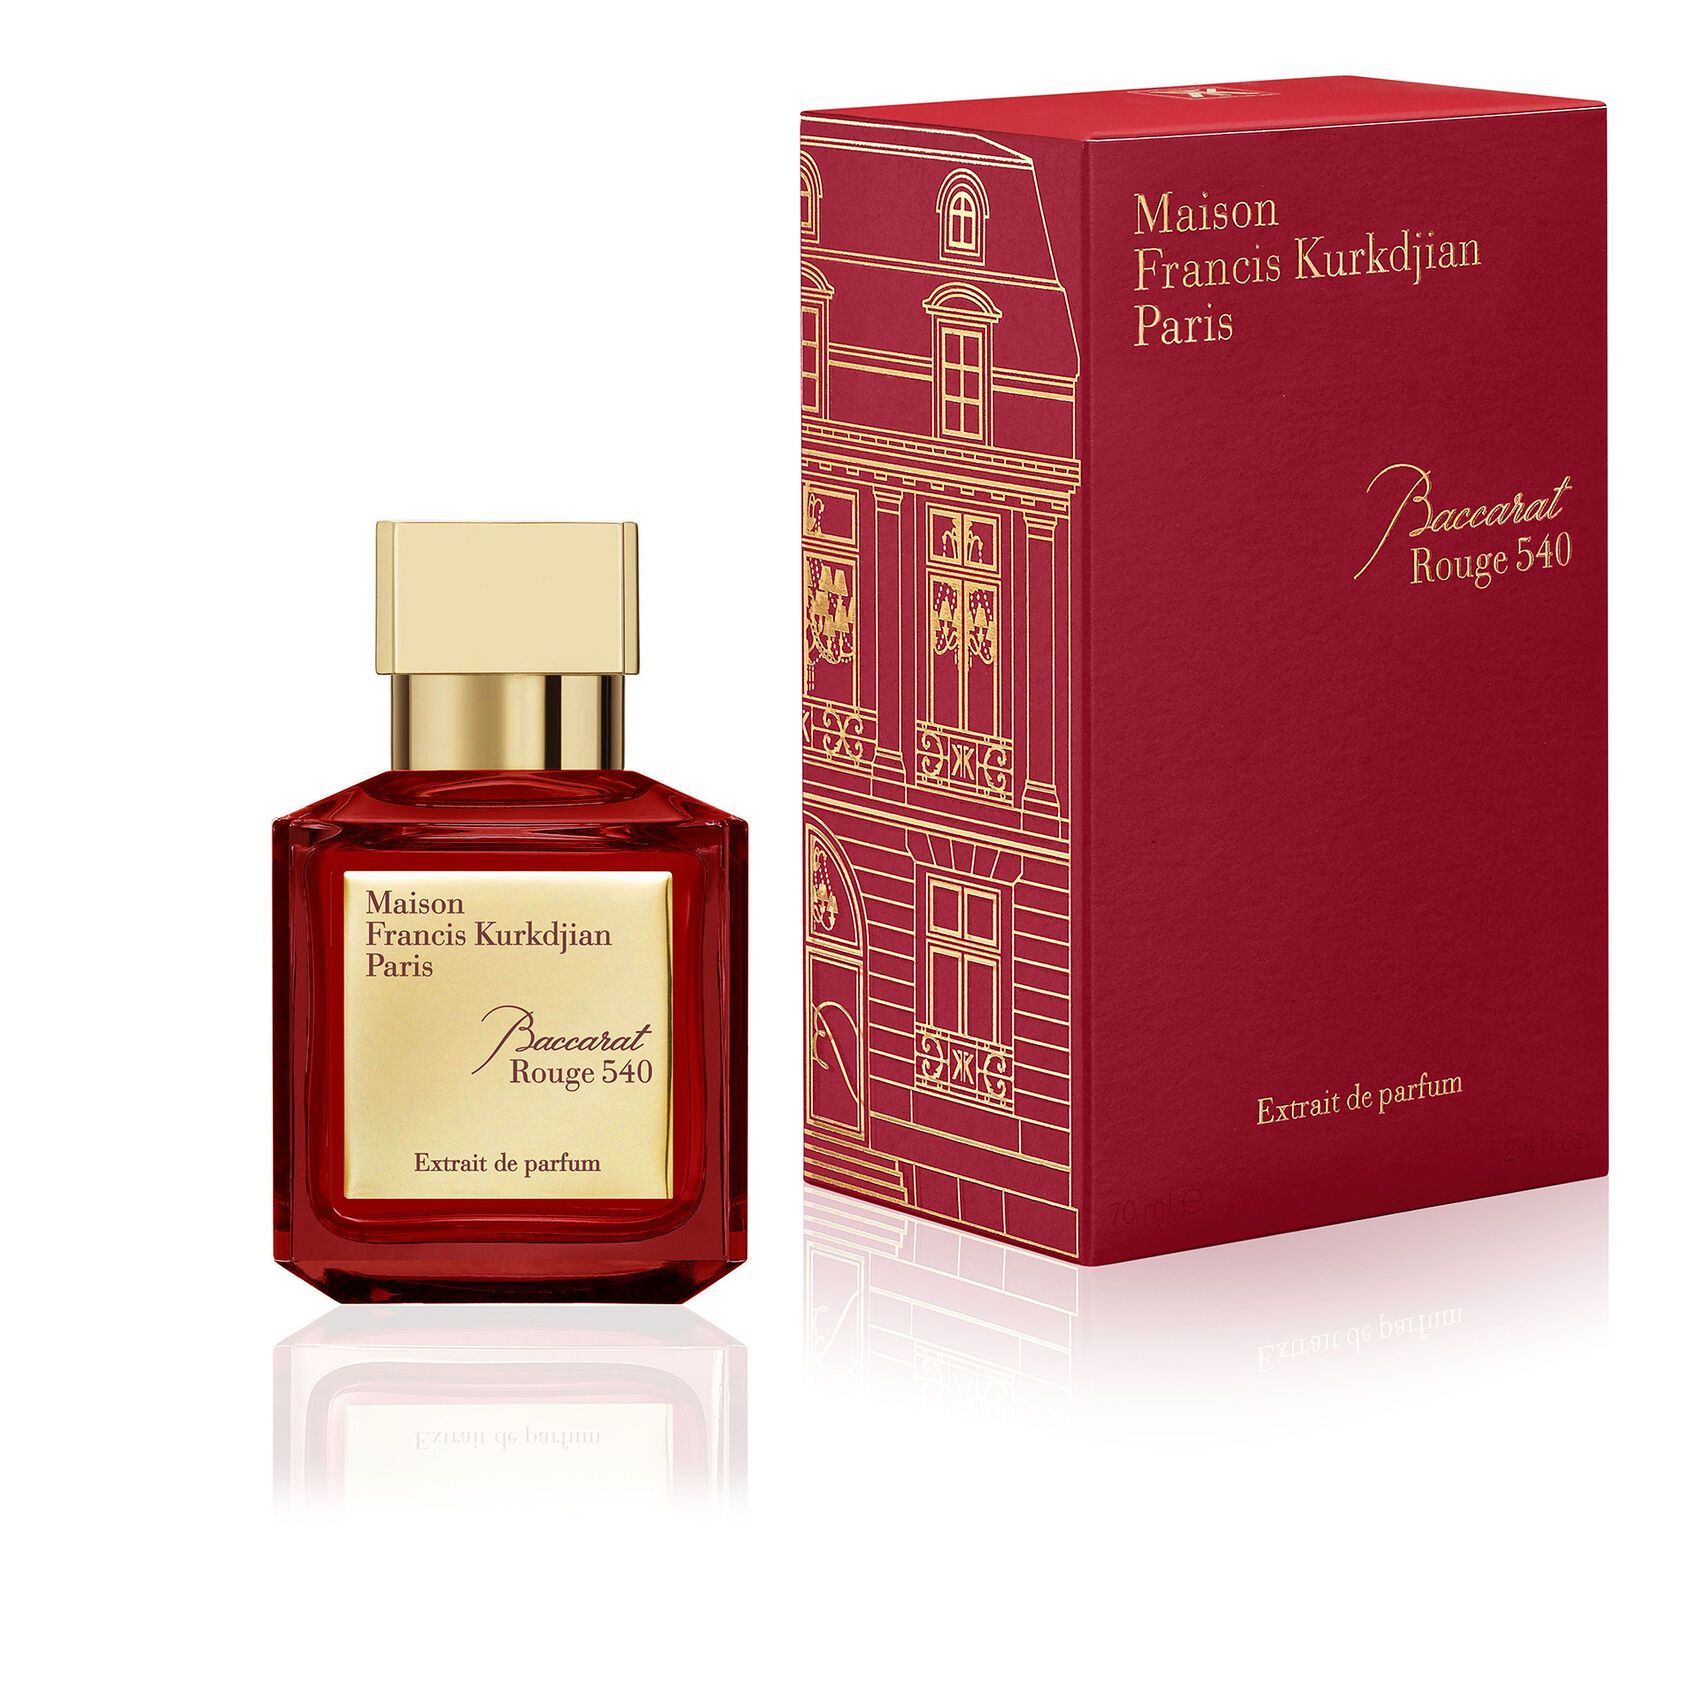 Baccarat Rouge 540 Extrait de Parfum Spray for Men and Women by Maison Francis Kurkdjian, Product image 1